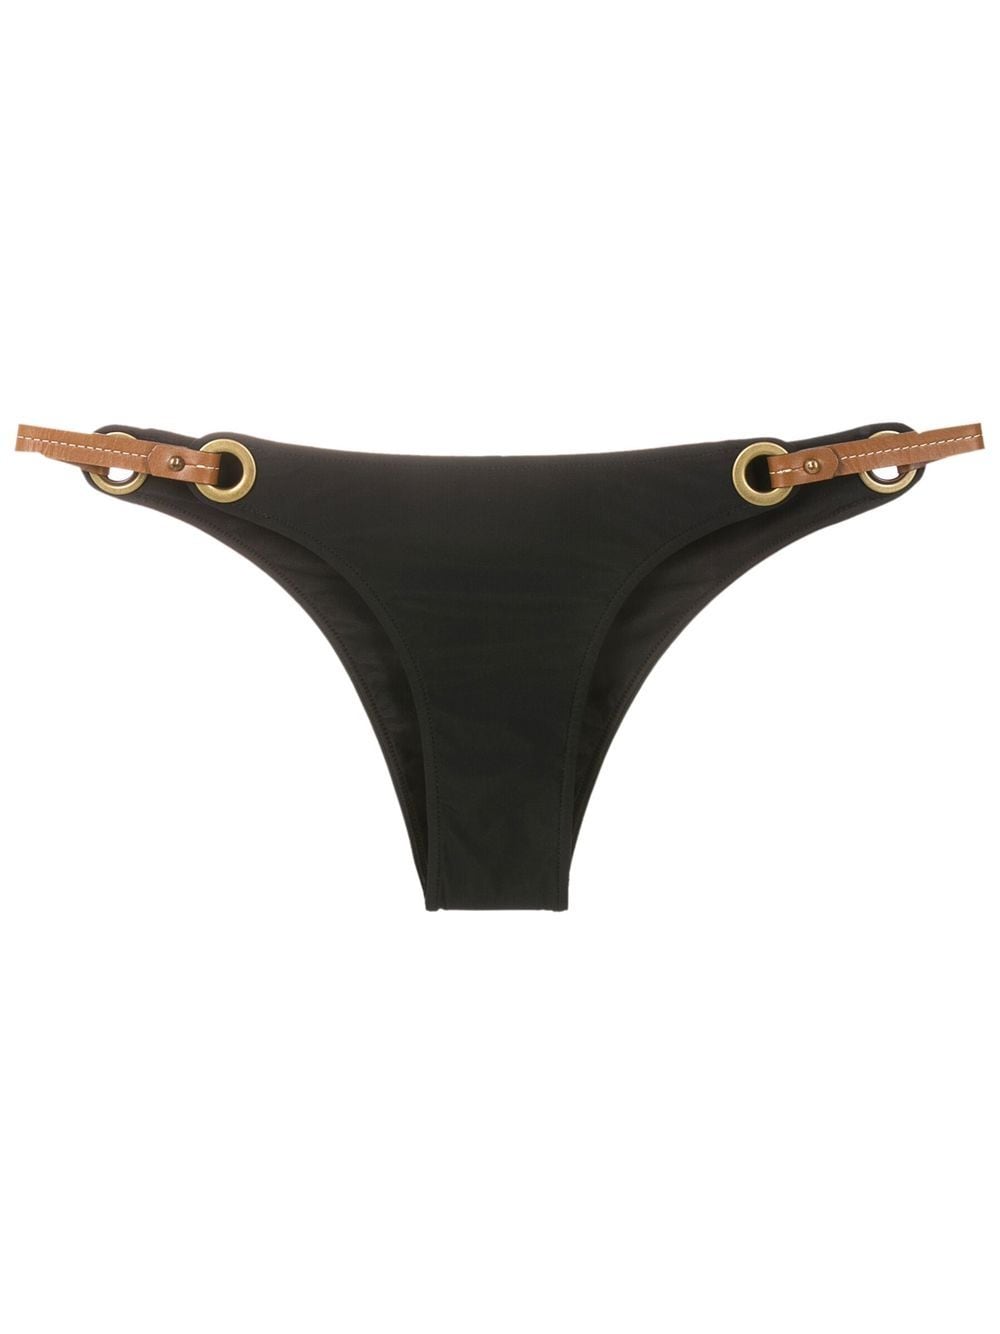 Lenny Niemeyer Alca Detalhe Ilhos Bikini Bottoms In Black